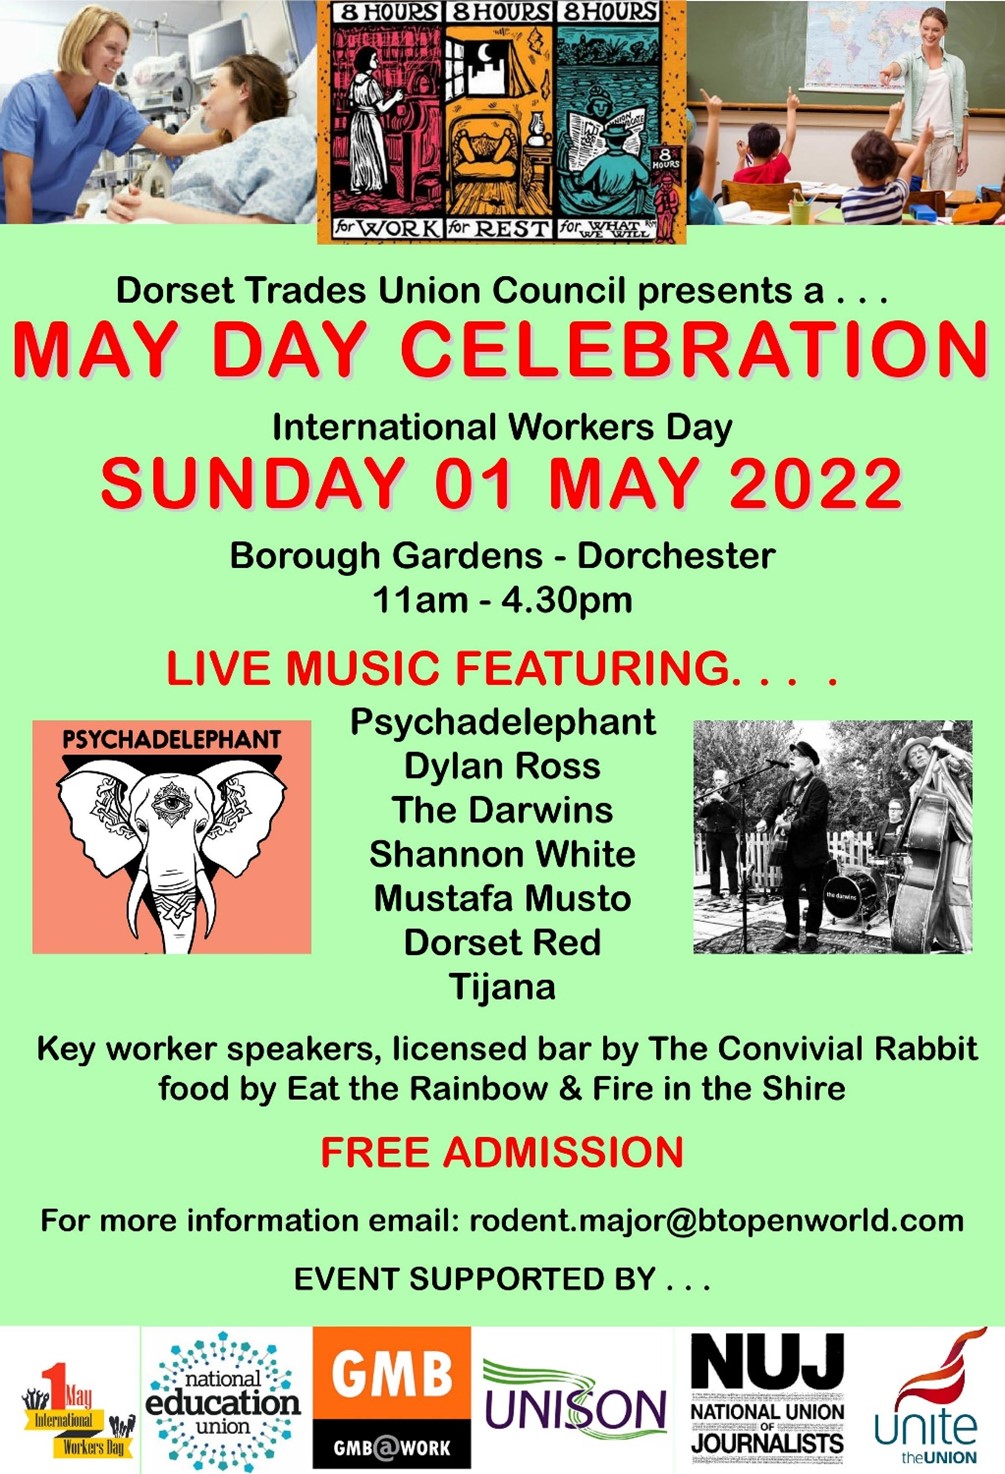 Meet WAND at Dorset Trades Union Mayday Celebration